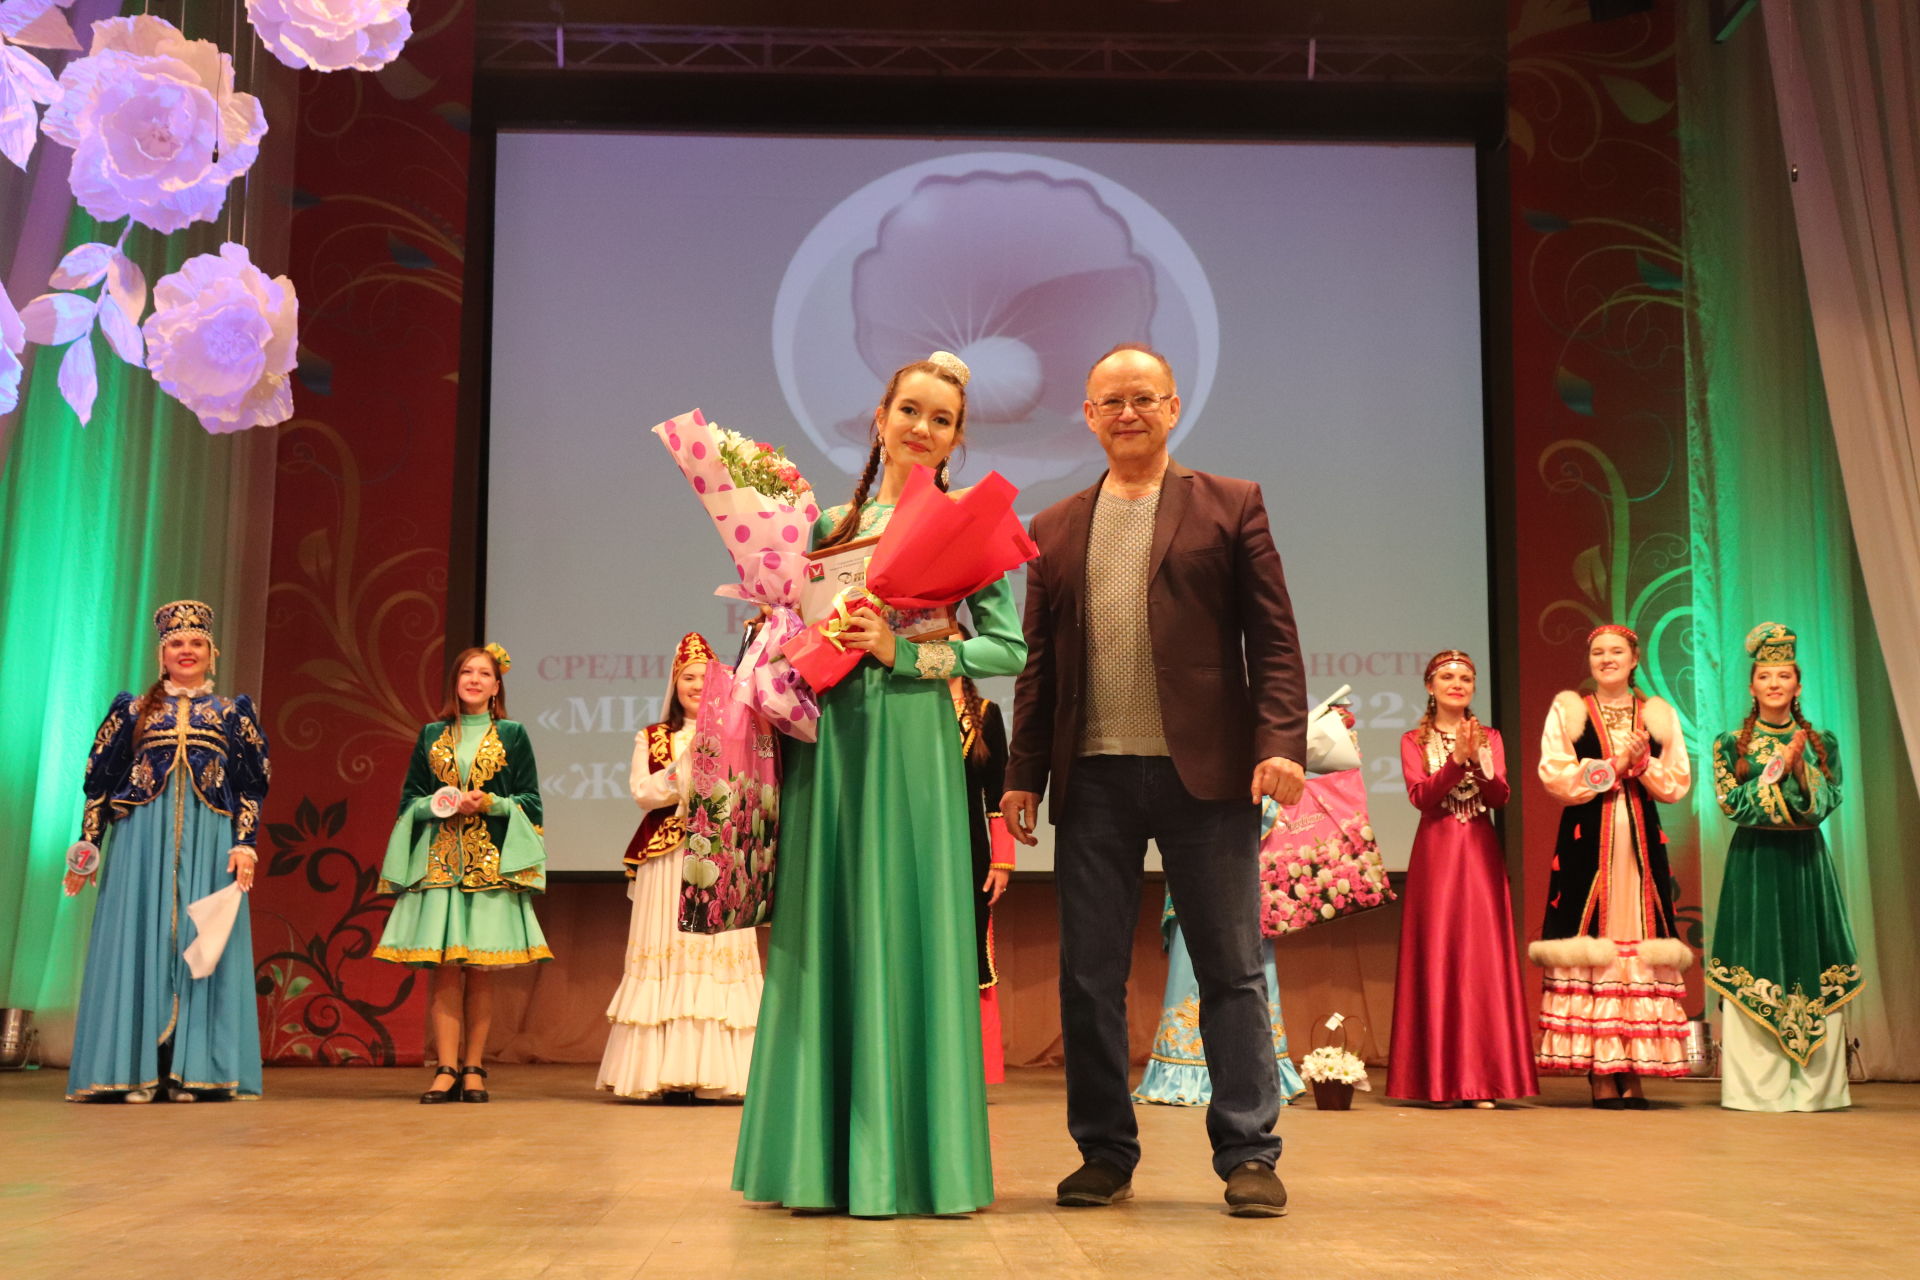 В Азнакаево прошел конкурс красоты и таланта ”Жемчужина нации"